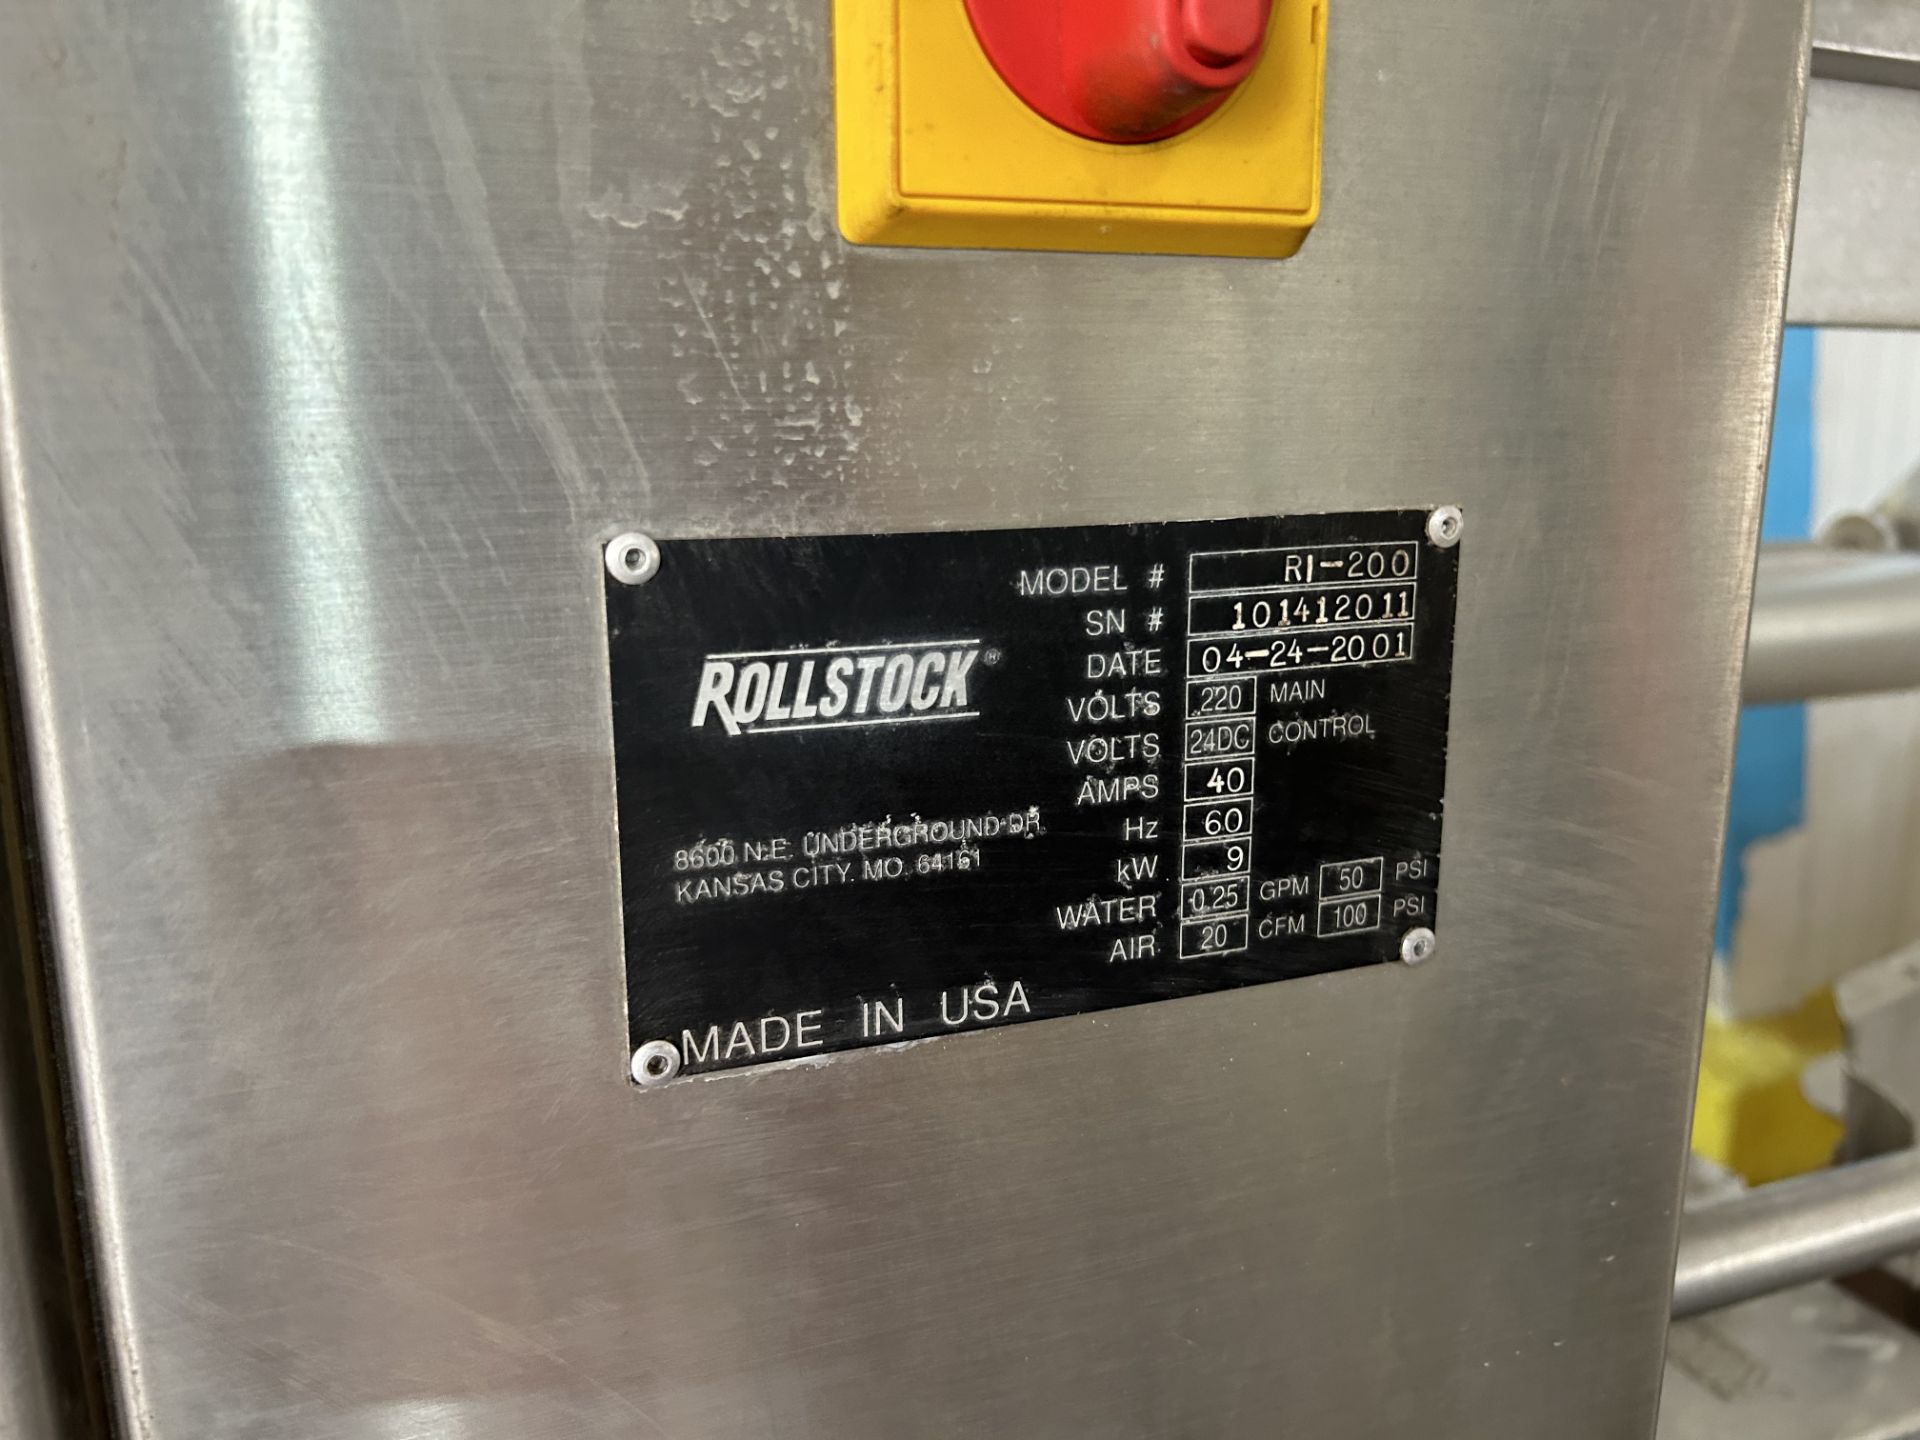 Lot Location: Hartley IA - Rollstock Packaging Machine, Model #RI-200, S/N #101412011 - Image 9 of 9